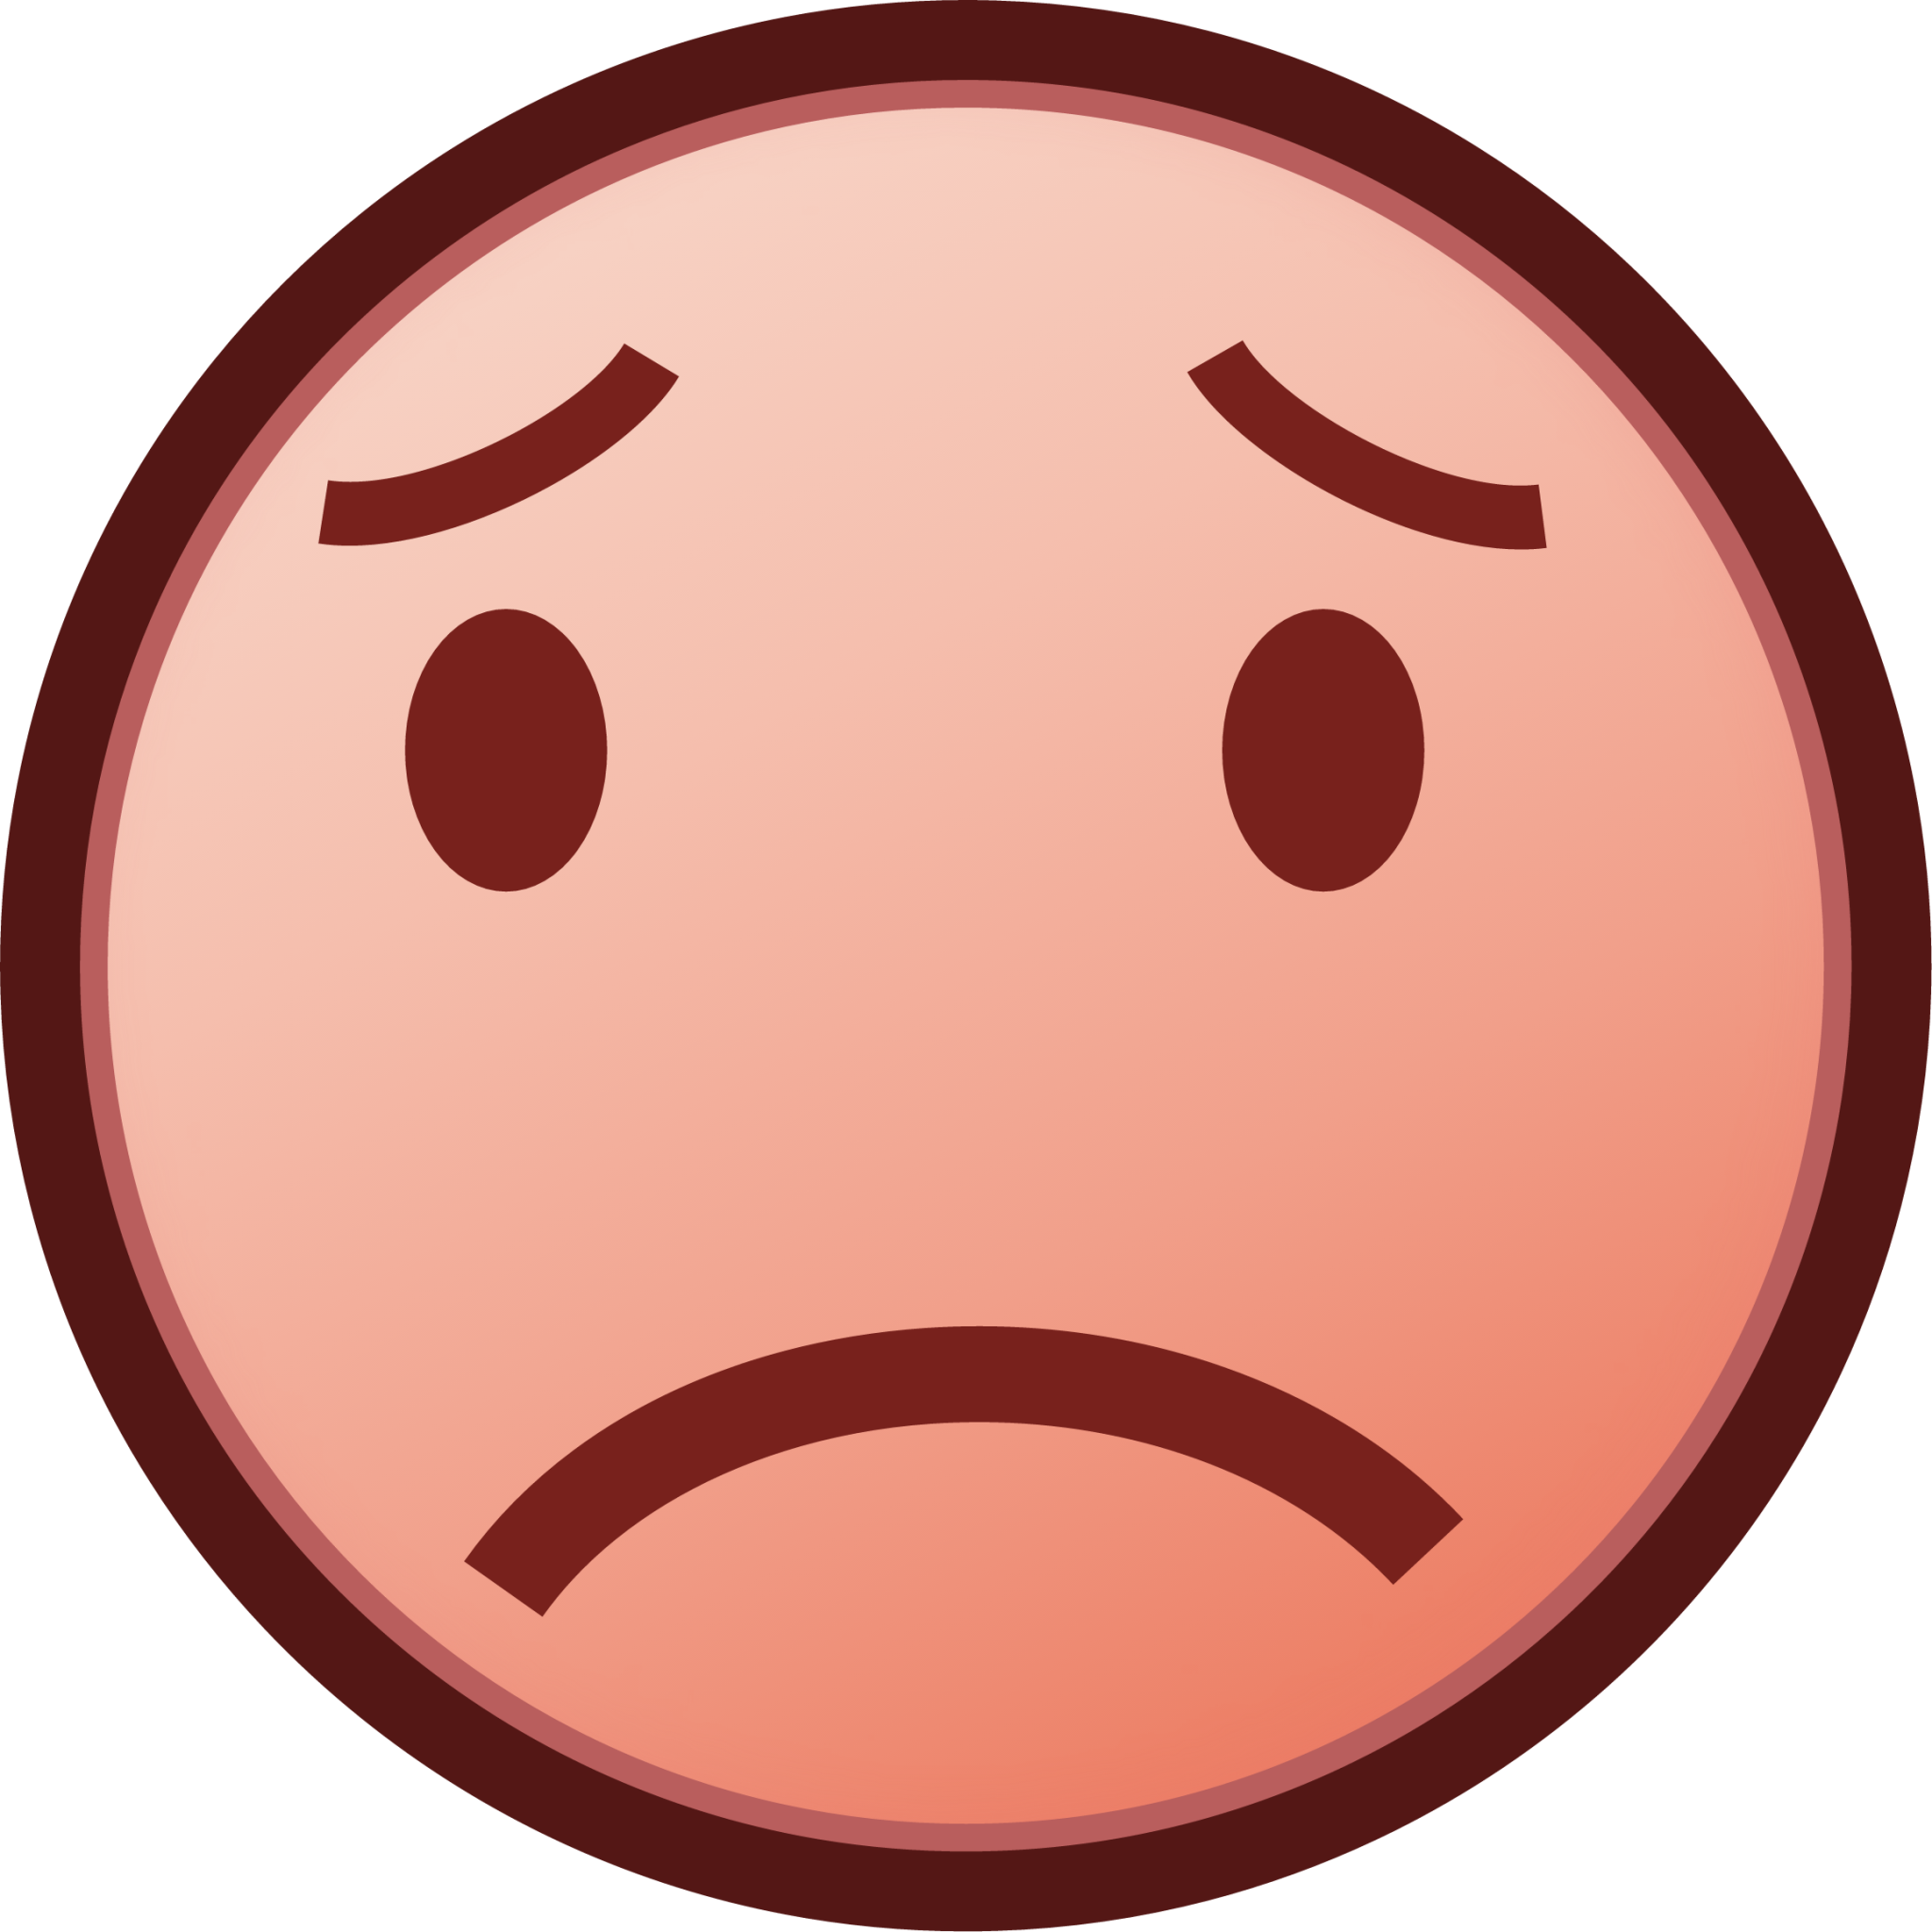 worried (plain) emoji